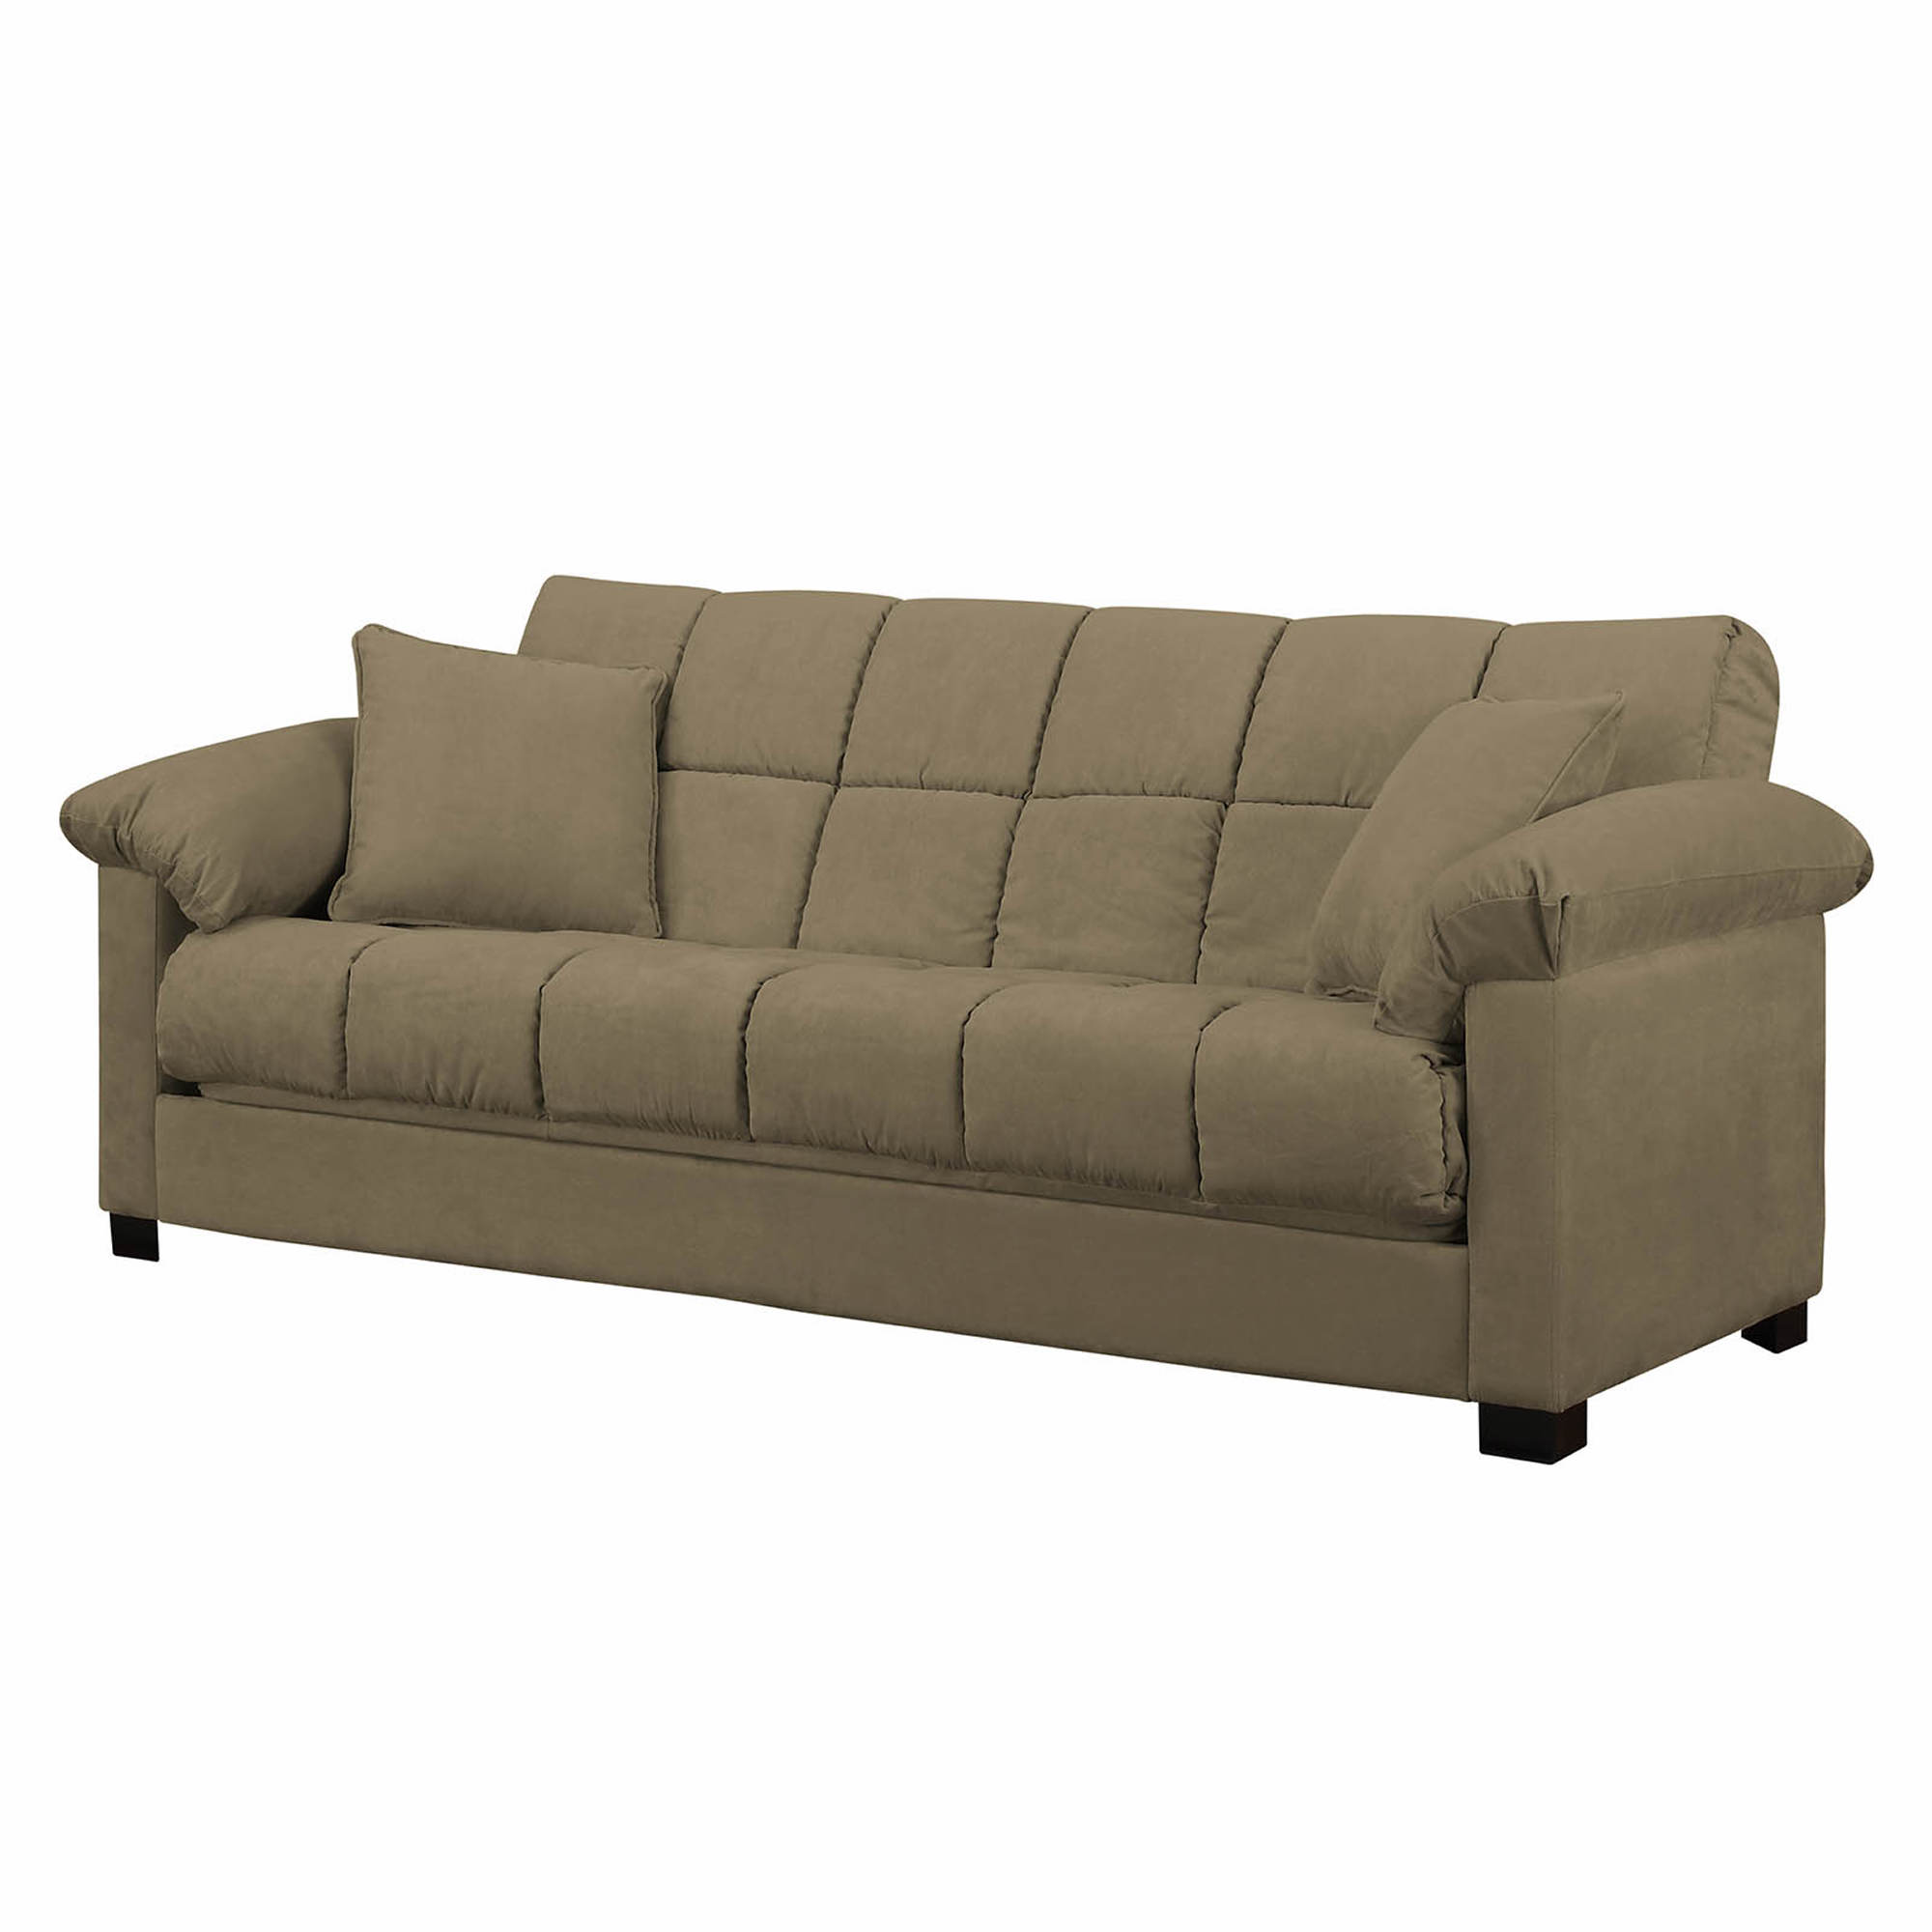 Handy Living ConvertaCouch FullSize Sleeper Sofa